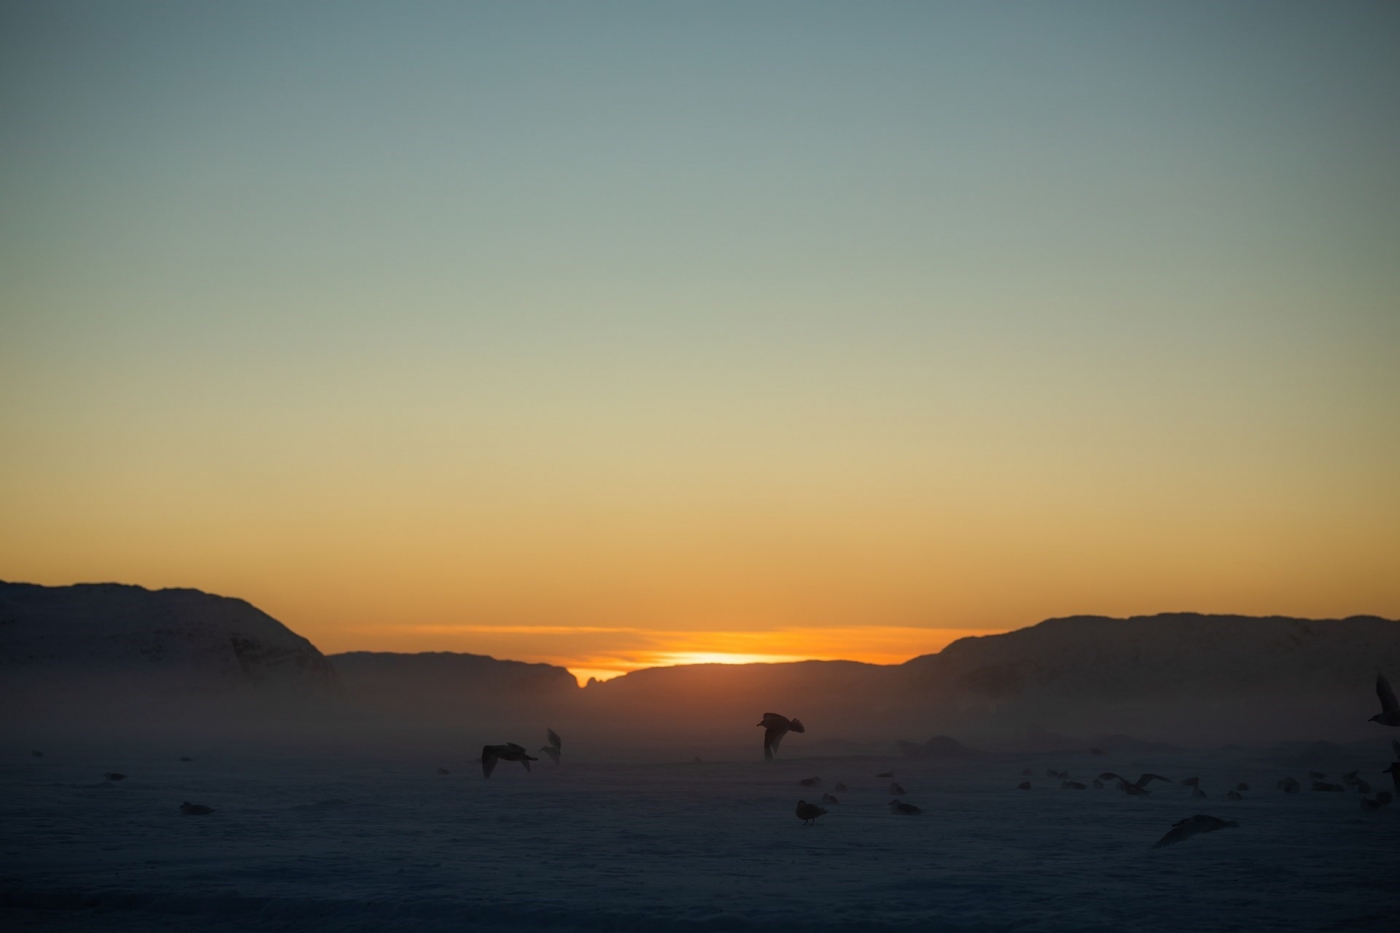 Photo by Aningaaq R Carlsen - Visit Greenland